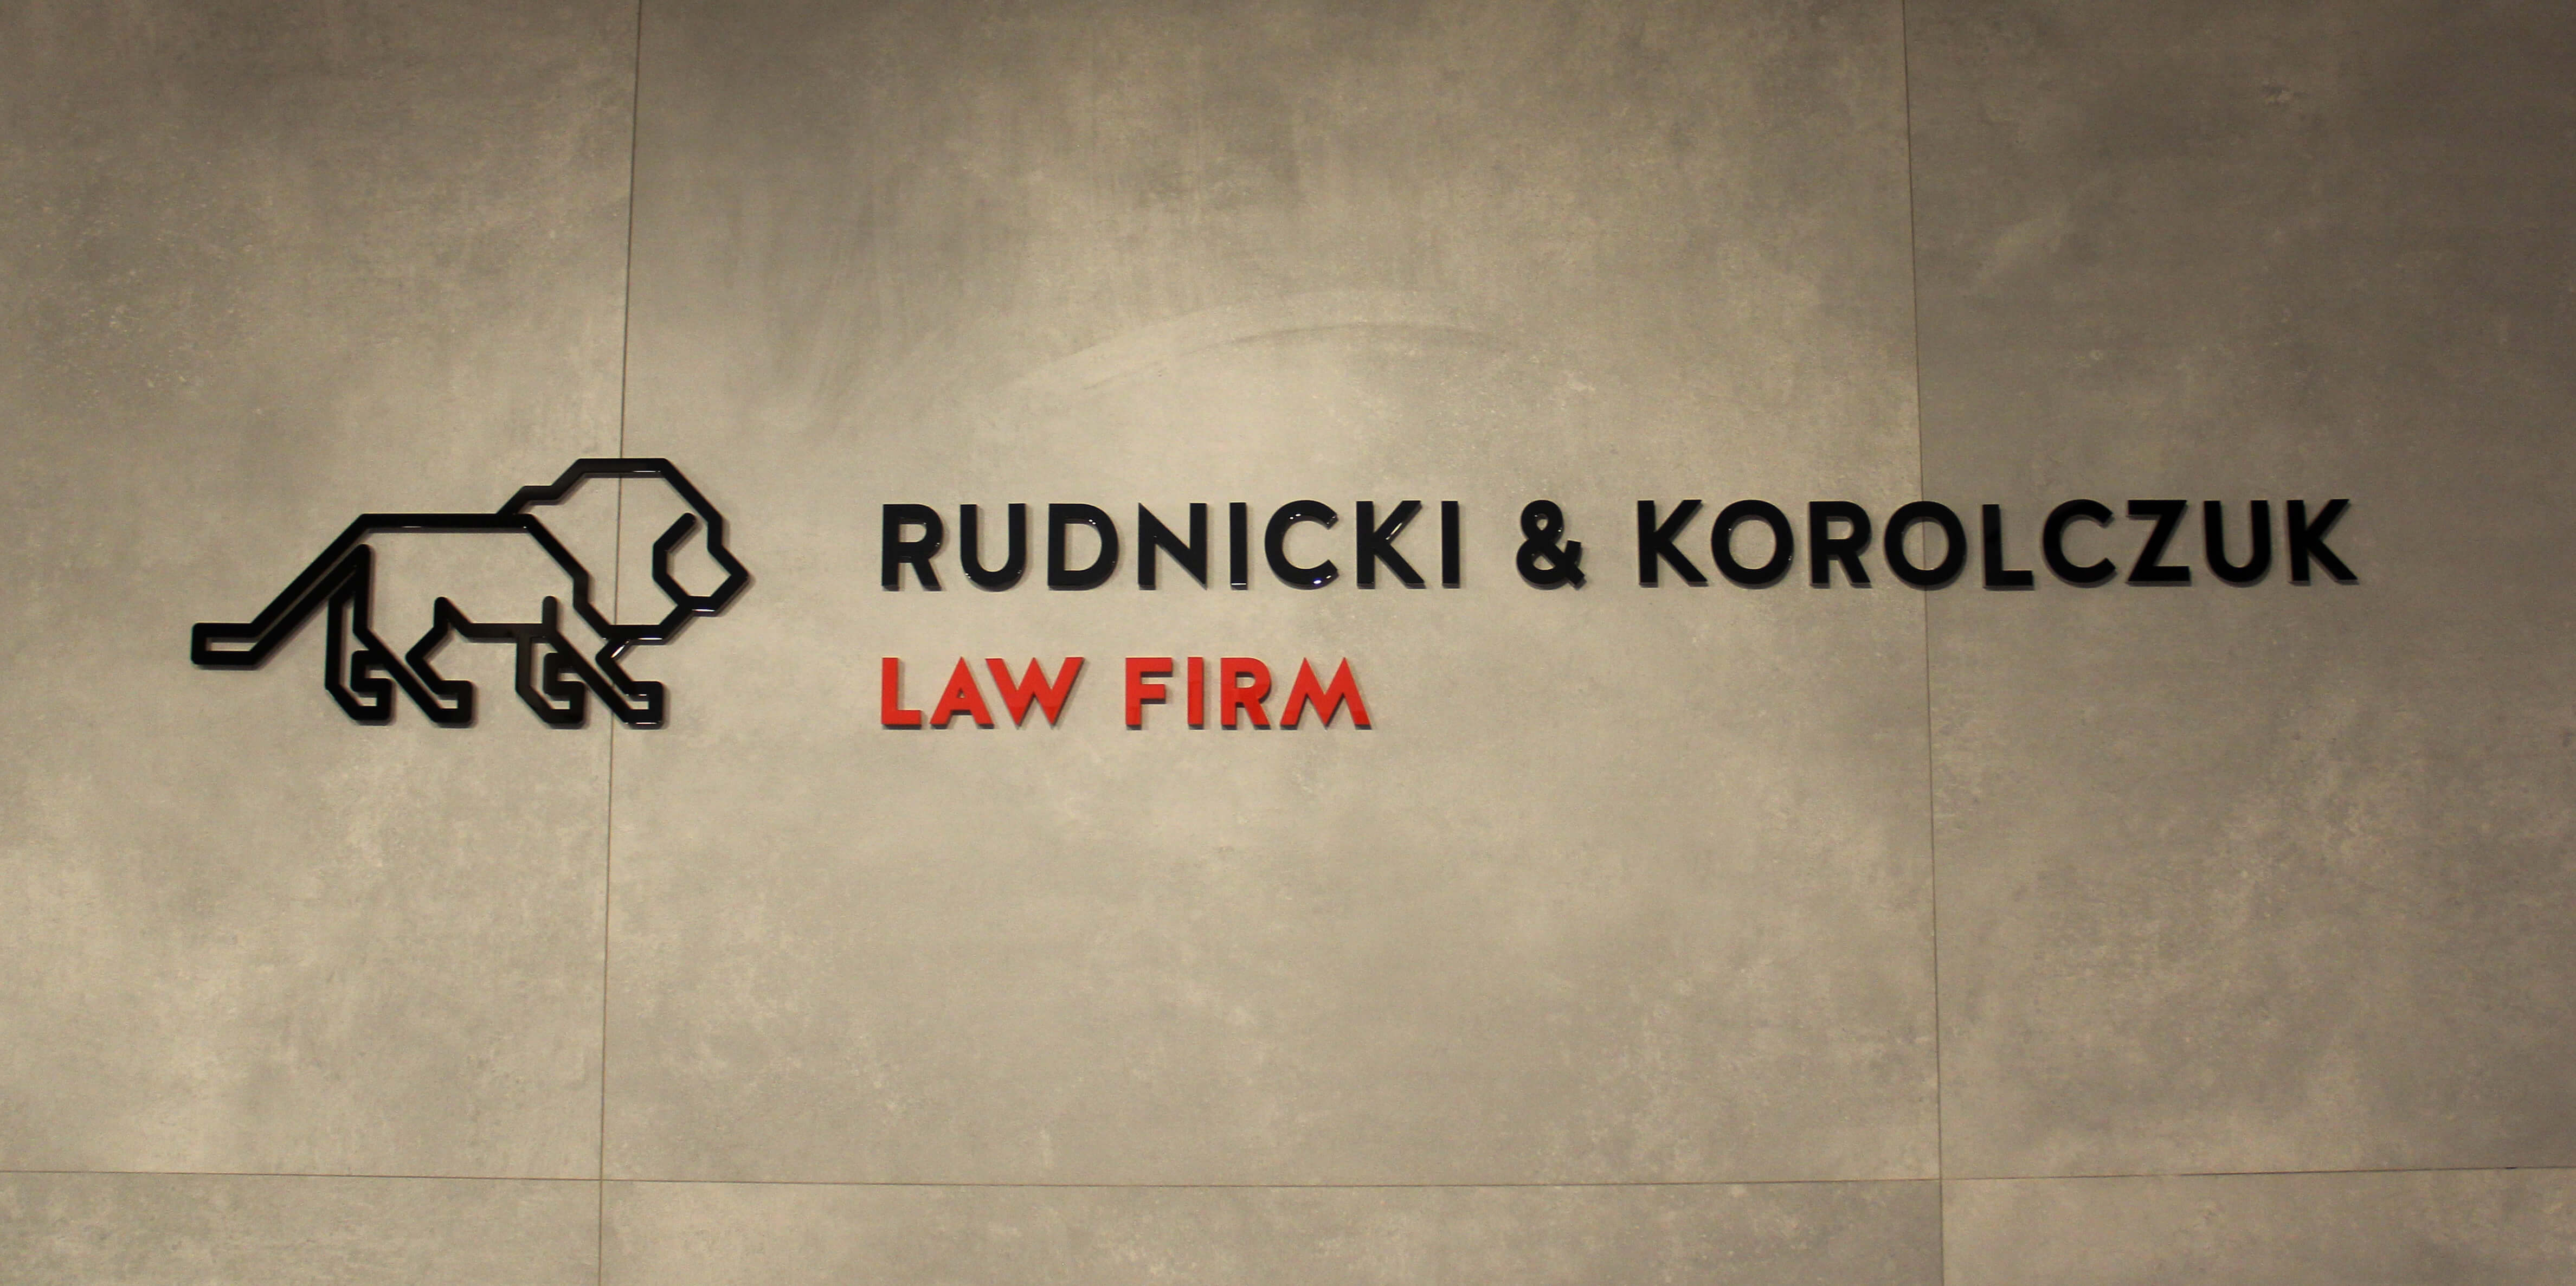 Rudnicki i Korolczuk - Rudnicki & Korolczuk - logo and 3D letters made of Plexiglass on the wall inside the building